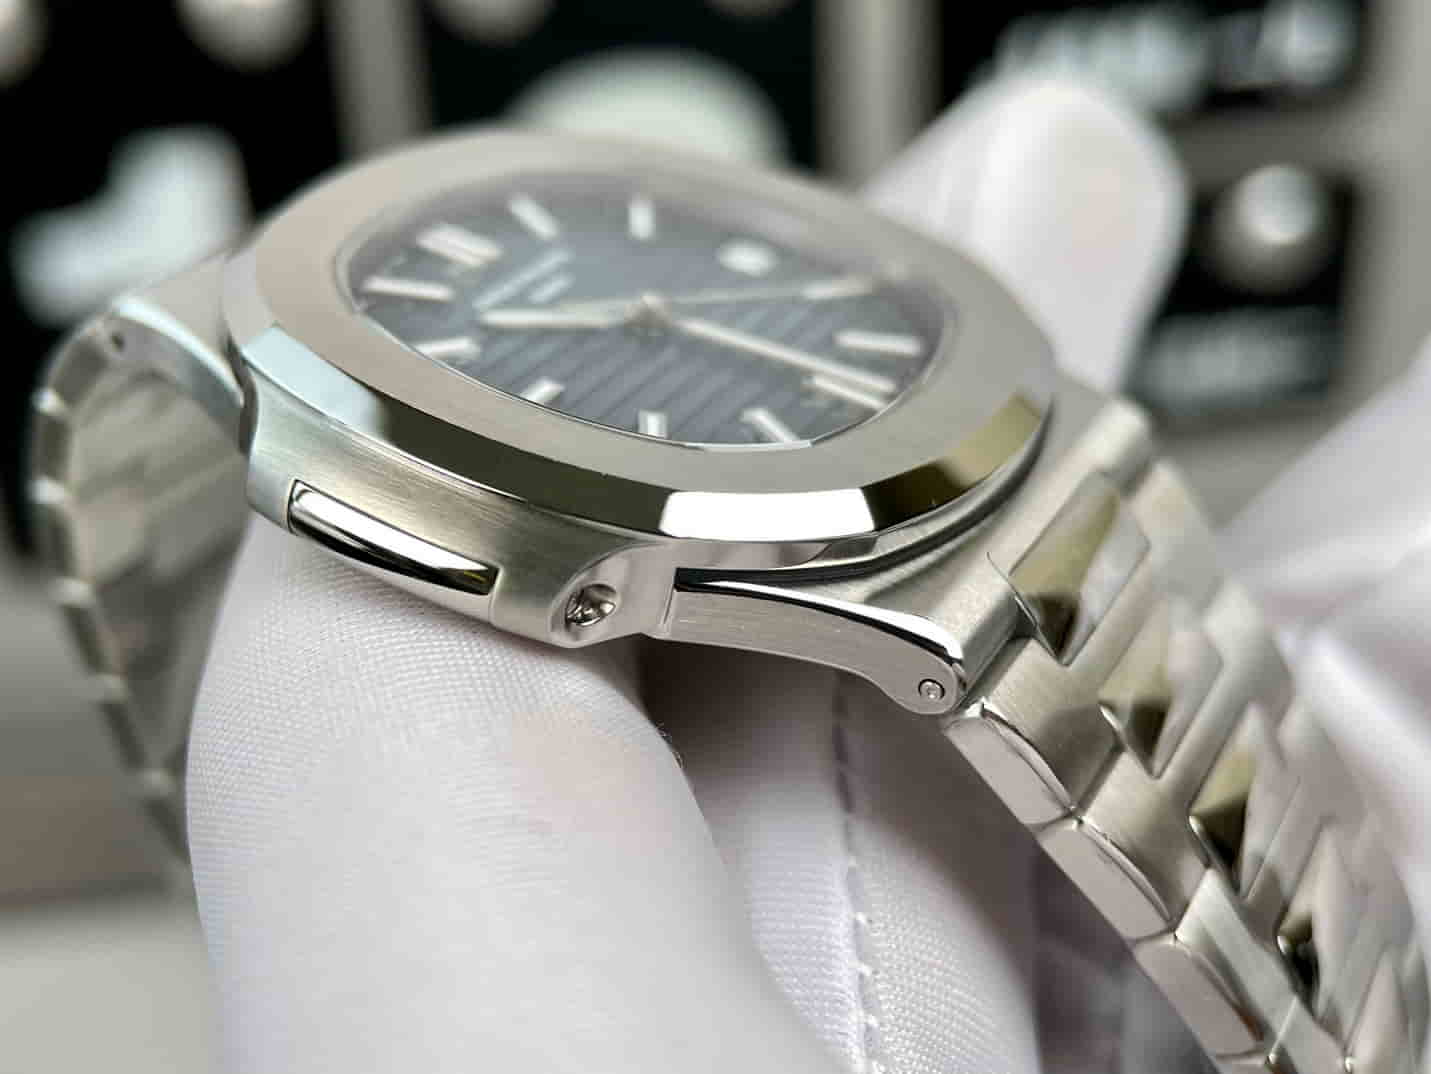 Giới thiệu về mẫu đồng hồ Patek Philippe Nautilus 5711 The Best Quality Replica